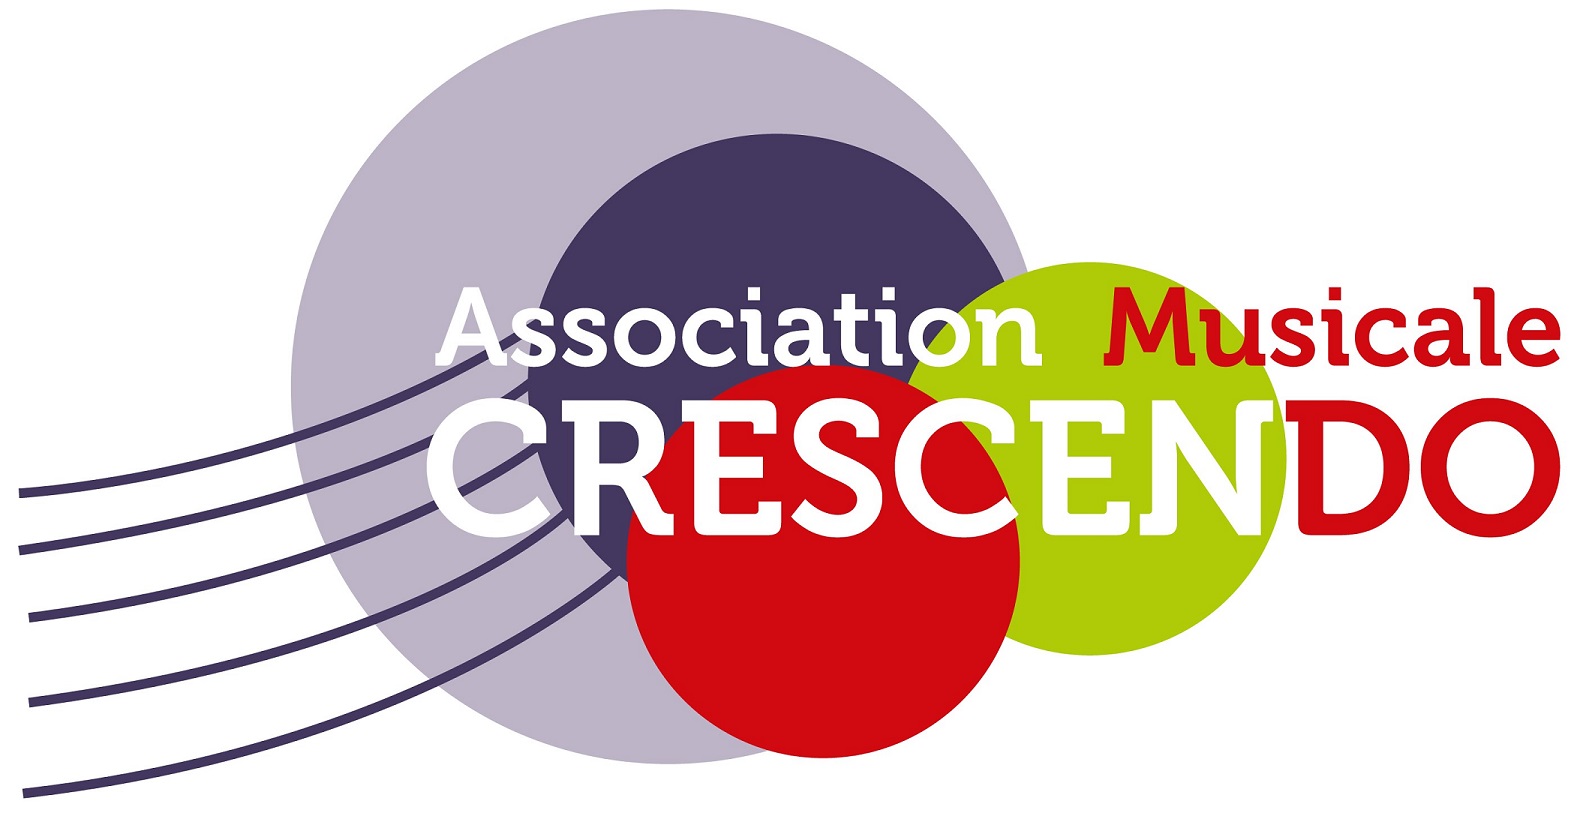 Association Musicale Crescendo